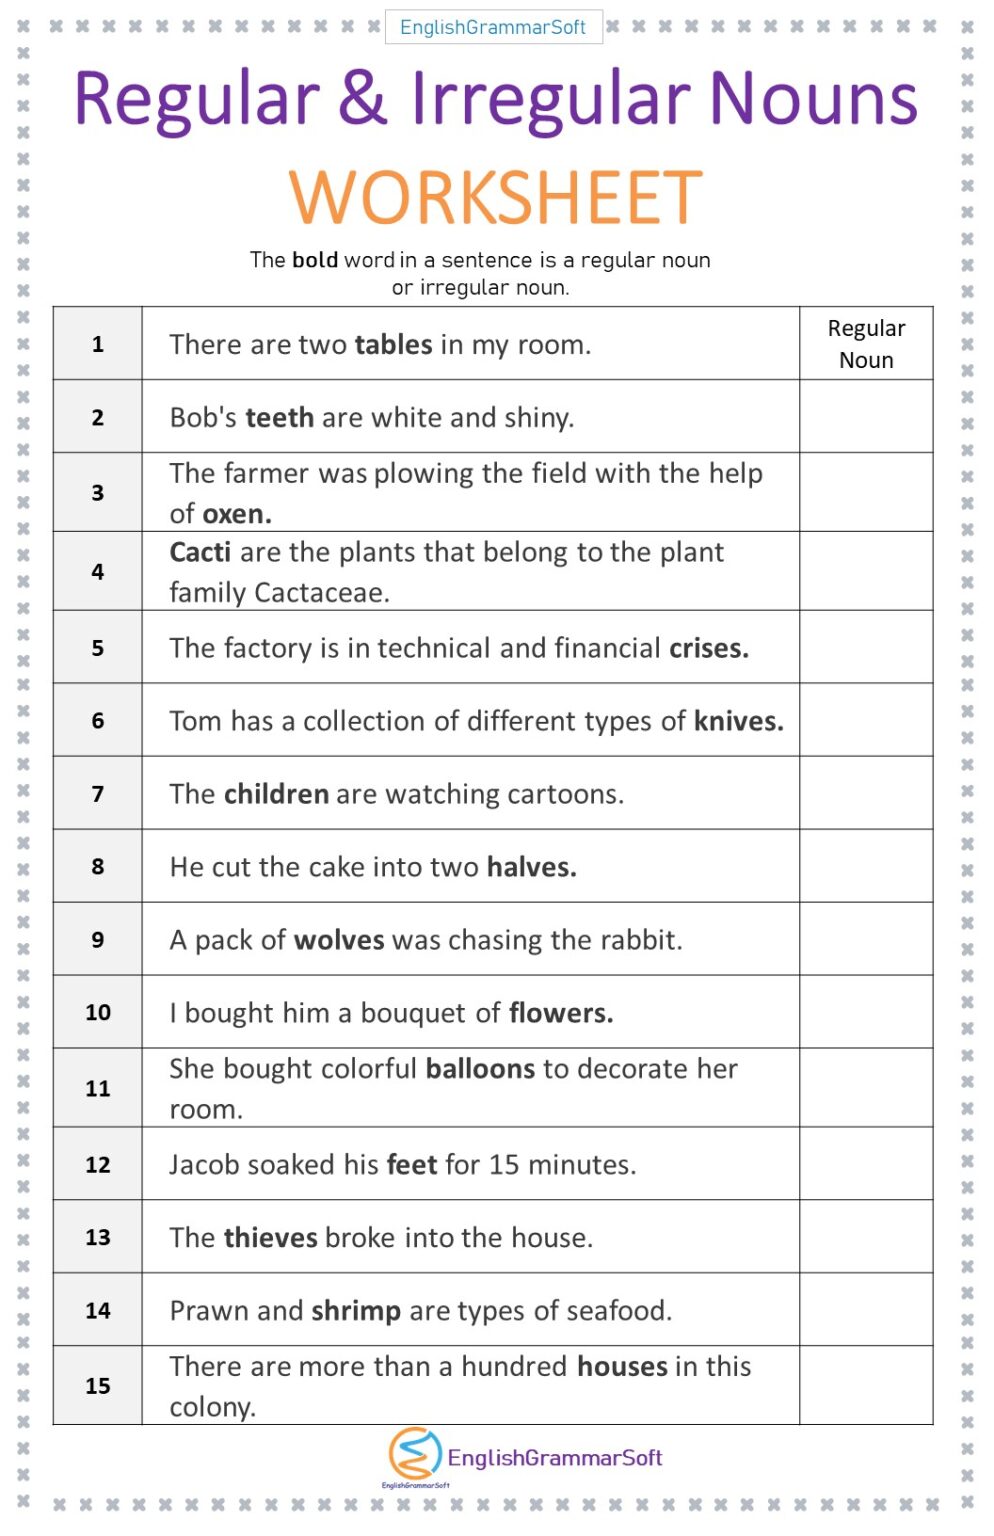 Types Of Nouns Worksheet